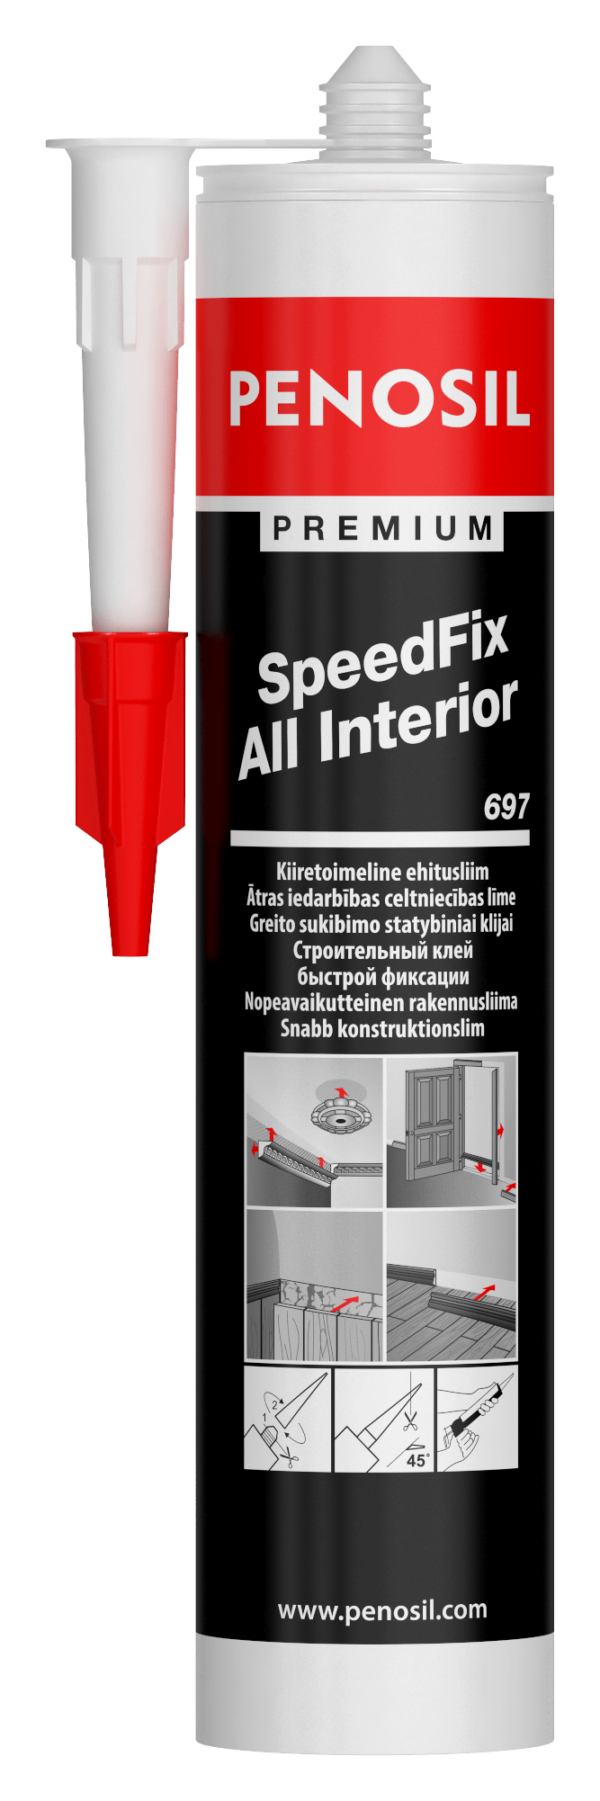 PENOSIL Premium SpeedFix All Interior 697 lepidlo pro interiérové práce